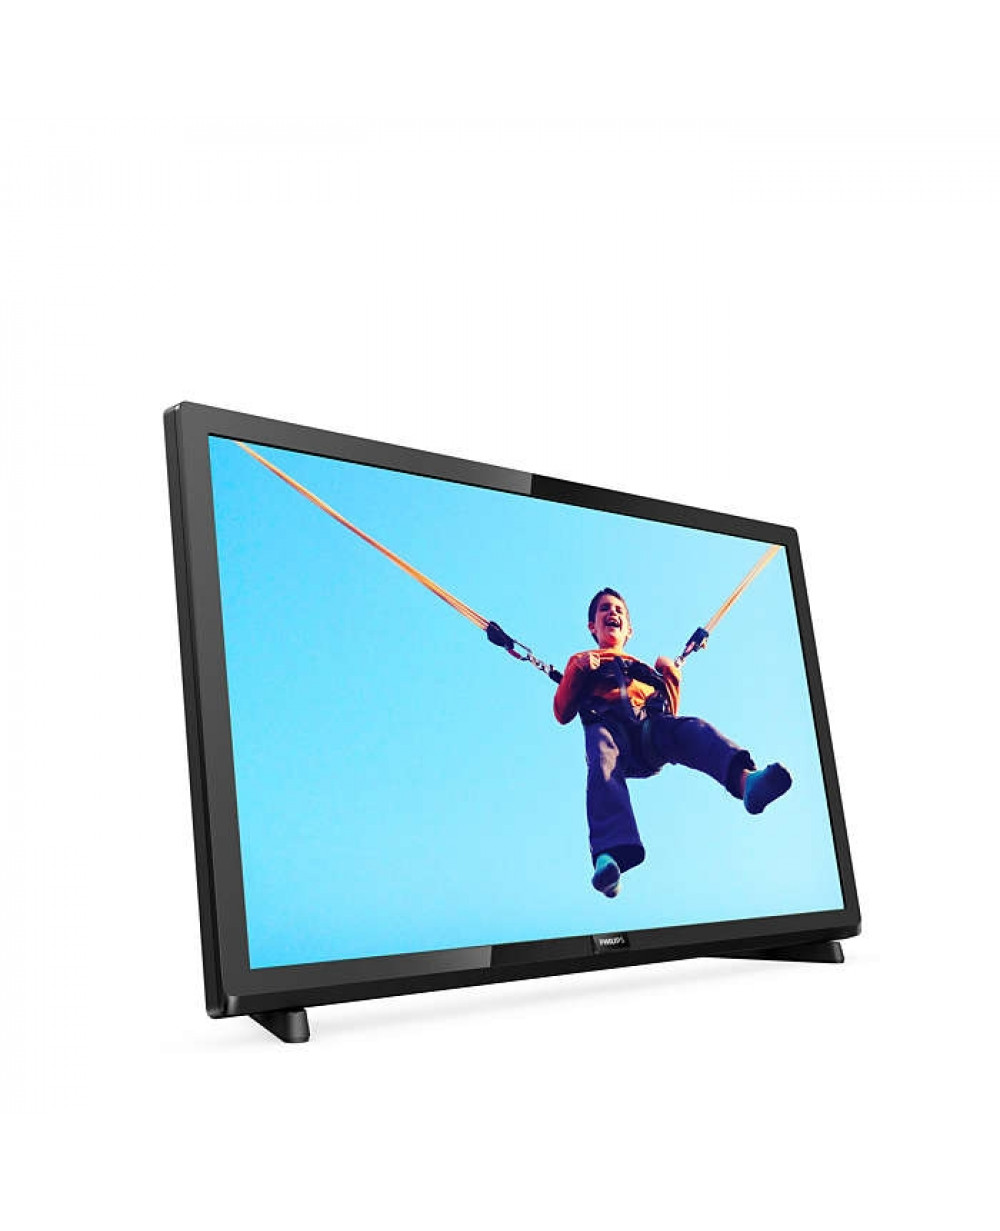 hunt Peregrination Genre Philips Tv - 22PFT5403/98 full hd 22 inch ultra slim LED TV